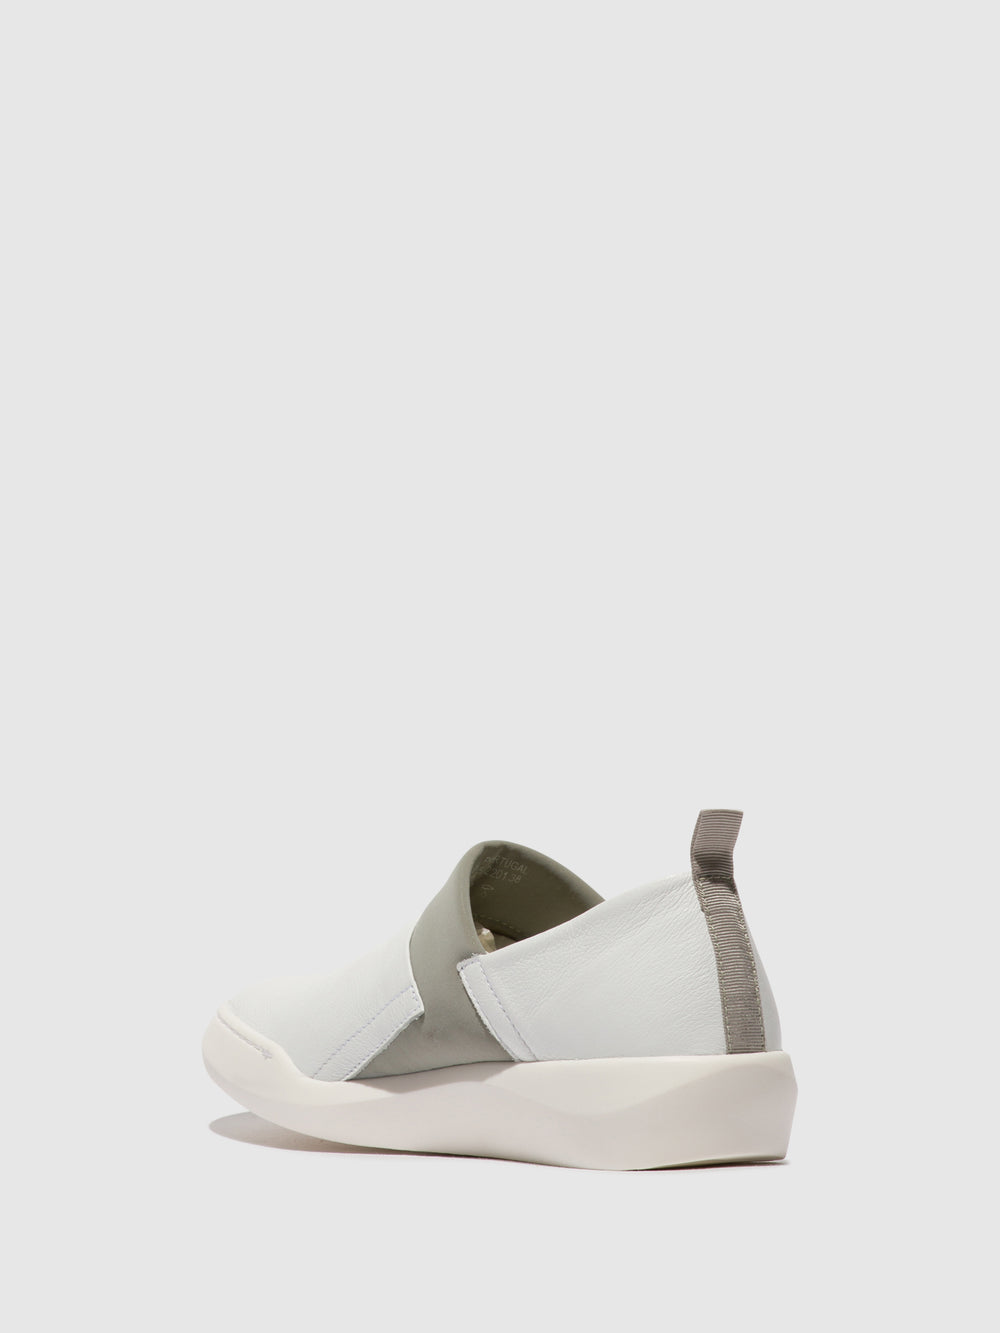 Slip-on Shoes BAJU709 WHITE/GREY